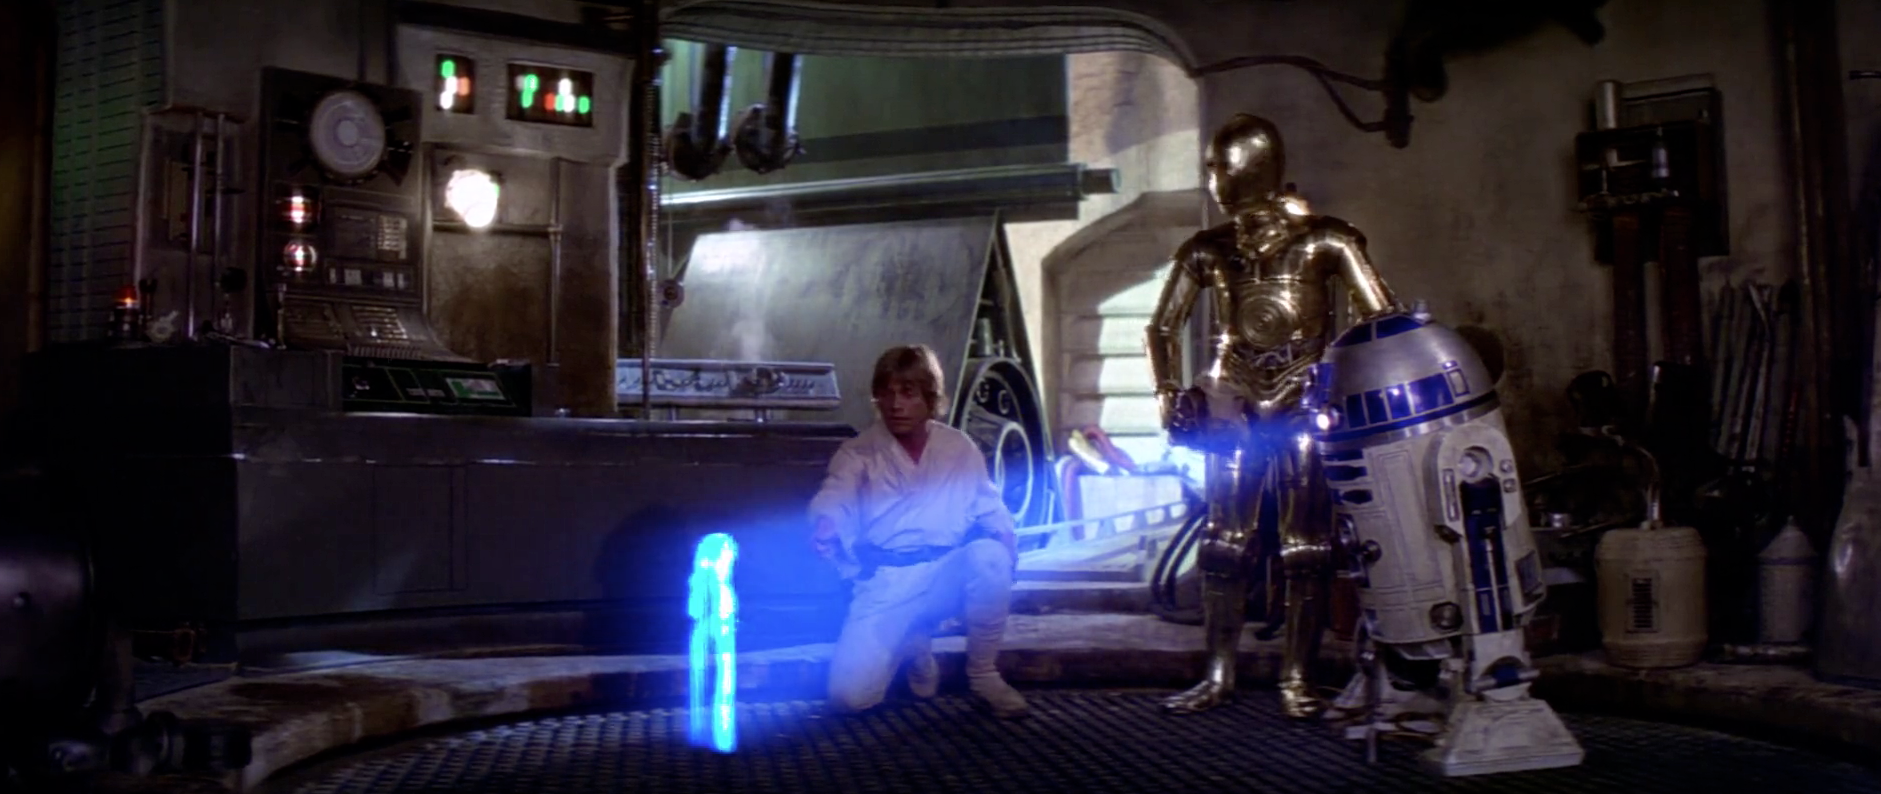 Hologram of Princess Leia in Star Wars.